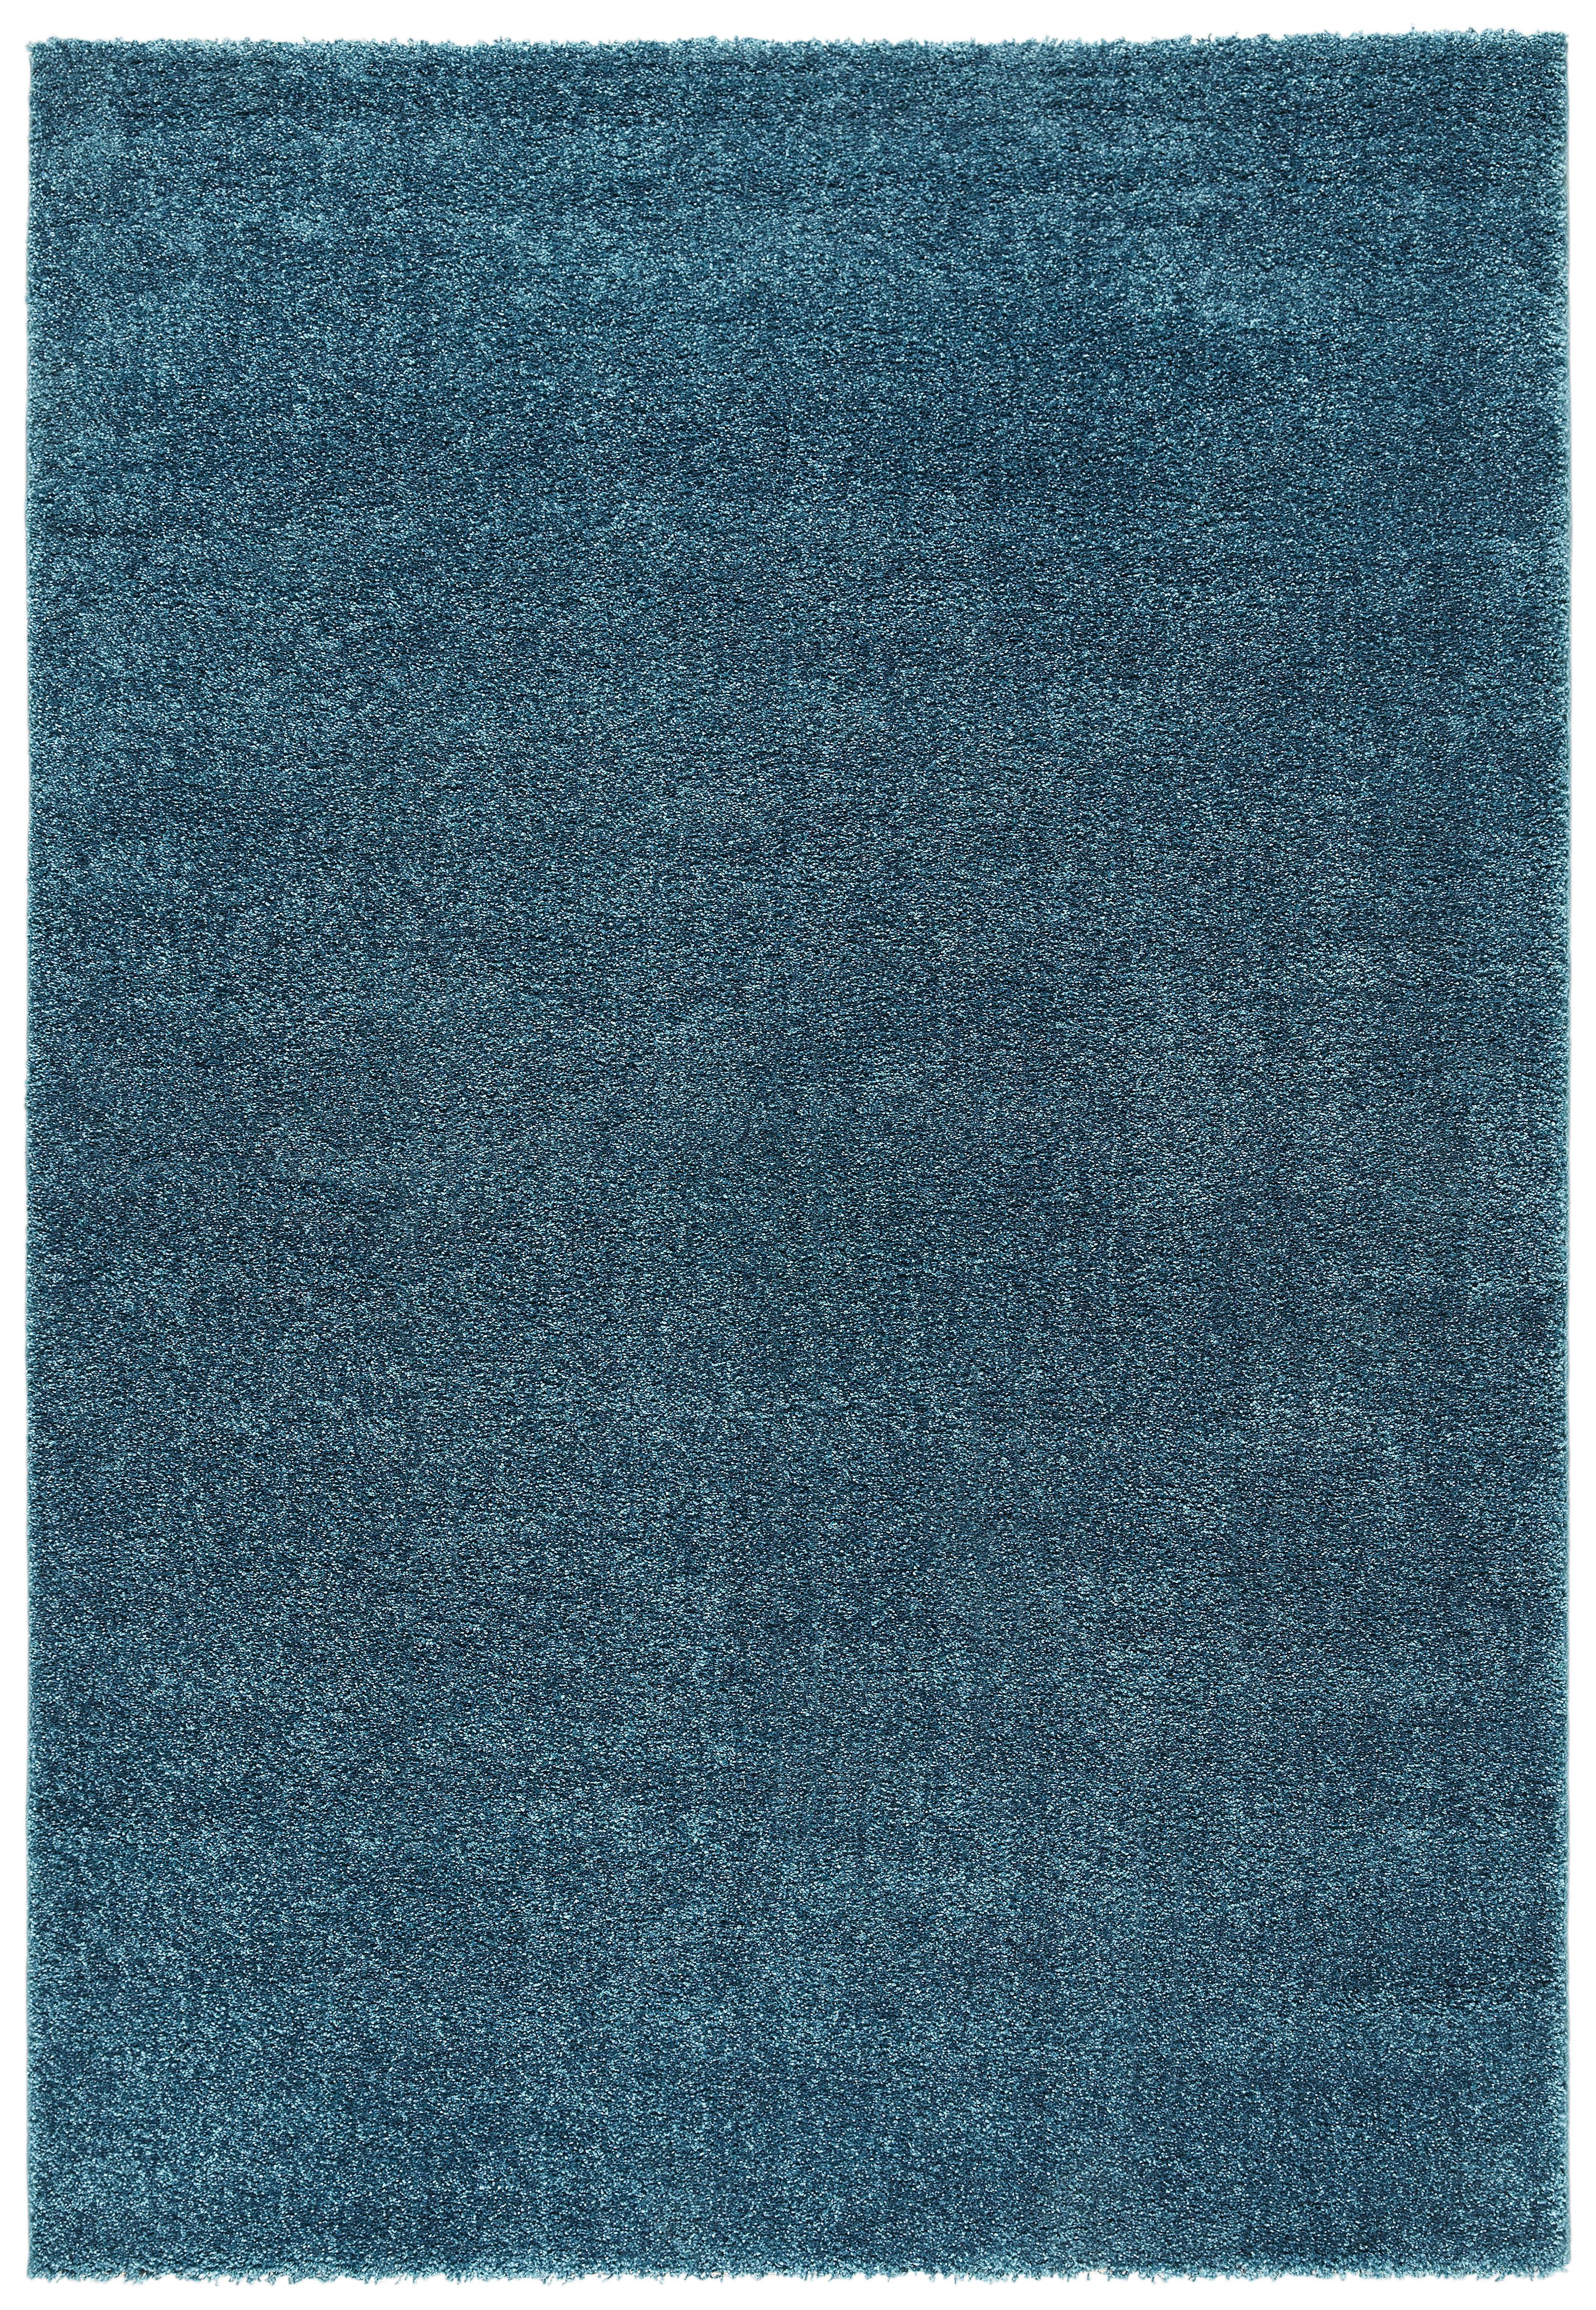 Tkaný Koberec Rubin 1, 80/150cm, Modrá - modrá, Moderní (80/150cm) - Modern Living